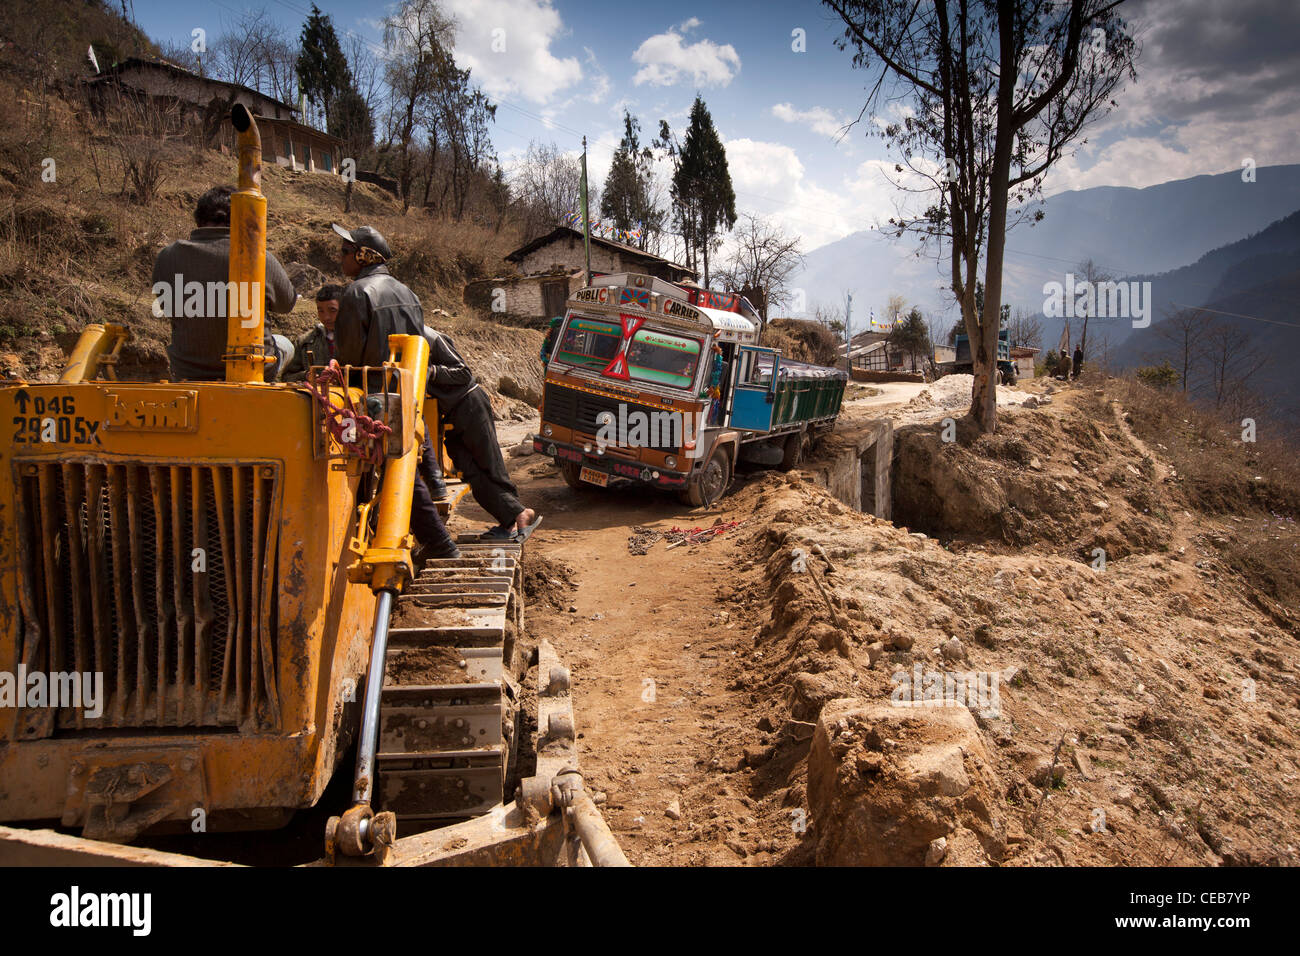 India, Arunachal Pradesh, Senge, bad driving, goods lorry sunk up to axles in soft ground Stock Photo